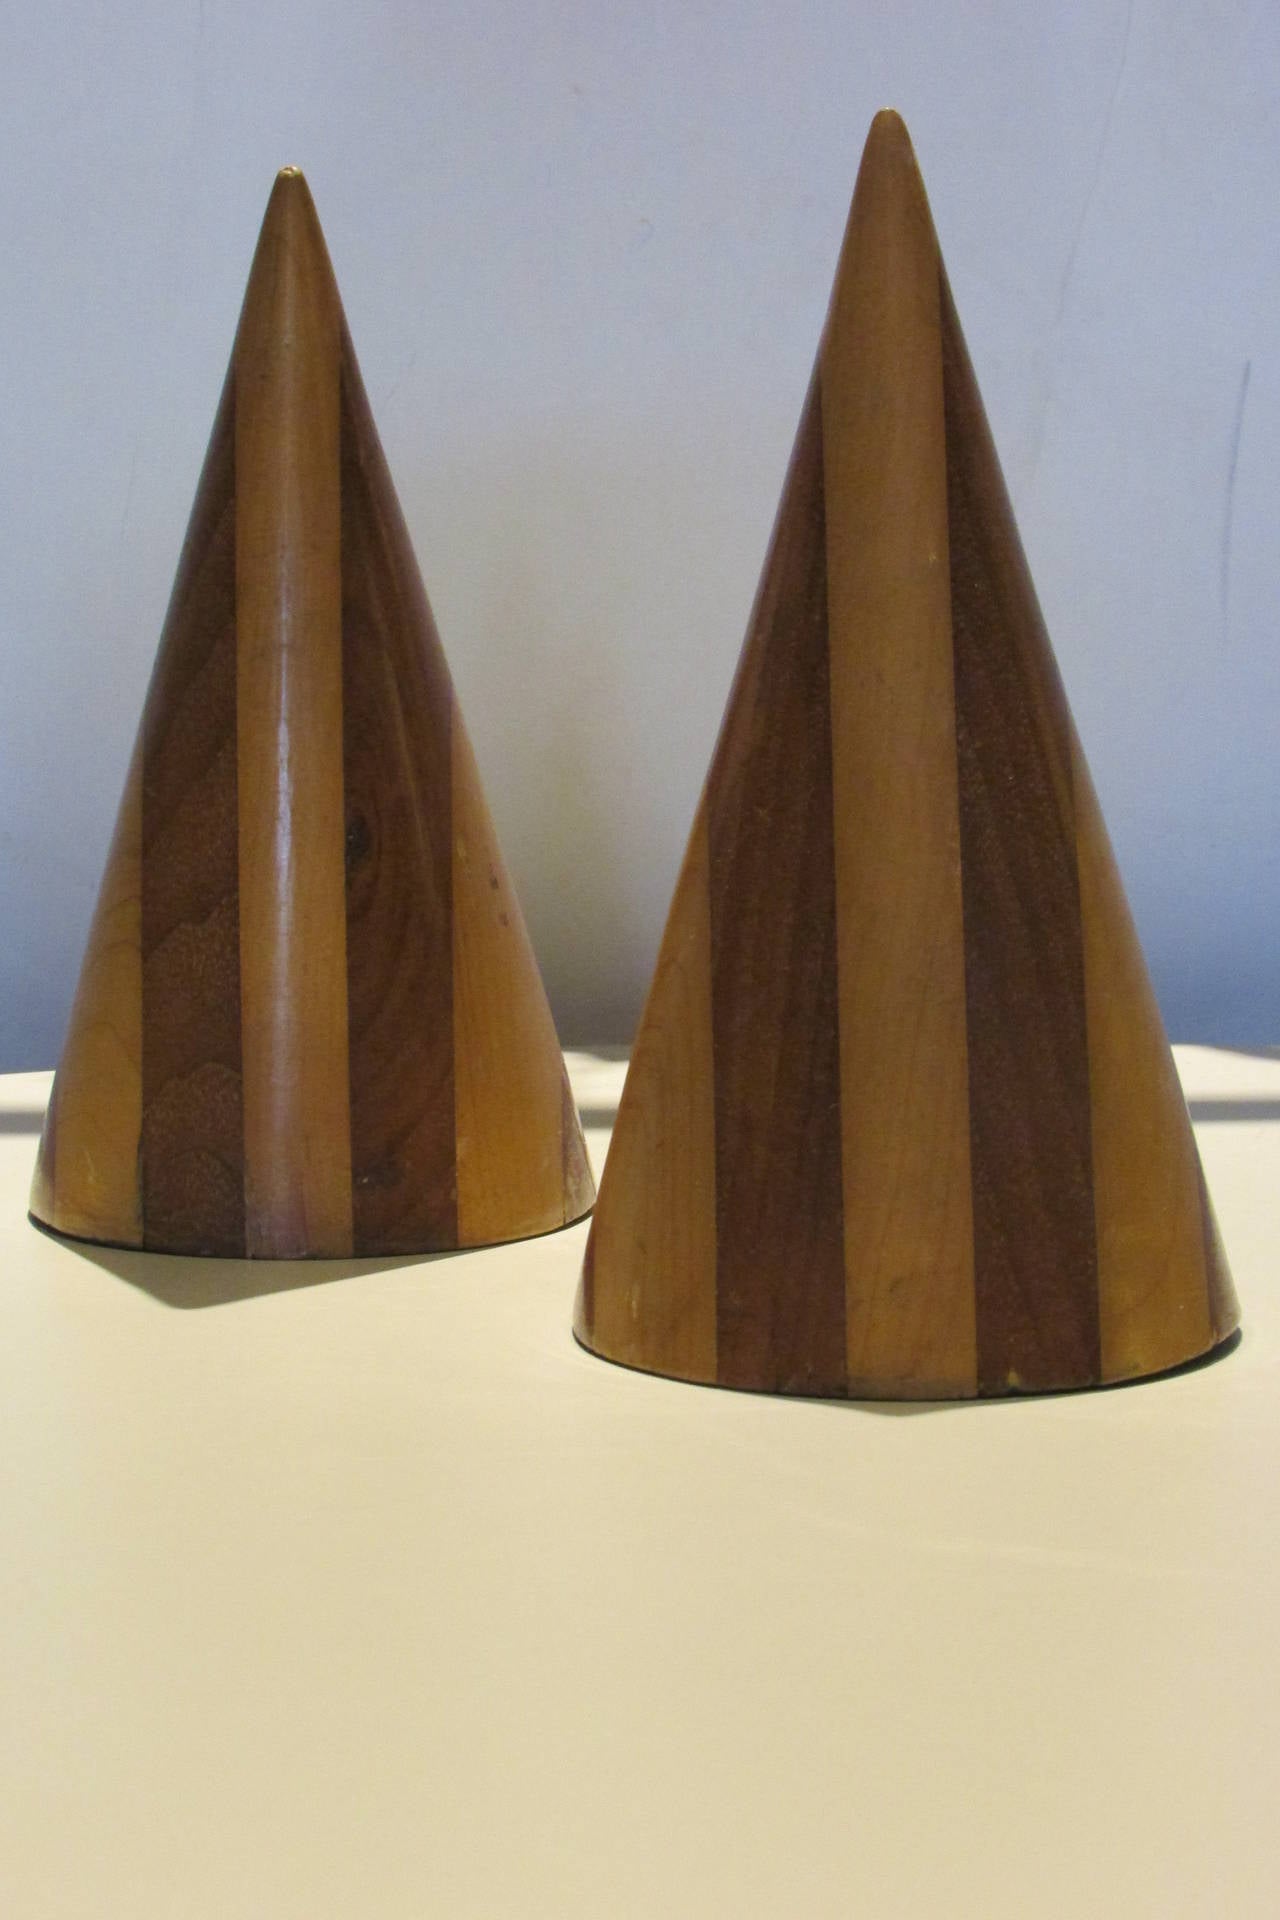 American Craftsman American Studio Craftsmen Inlaid Wood Cone Forms